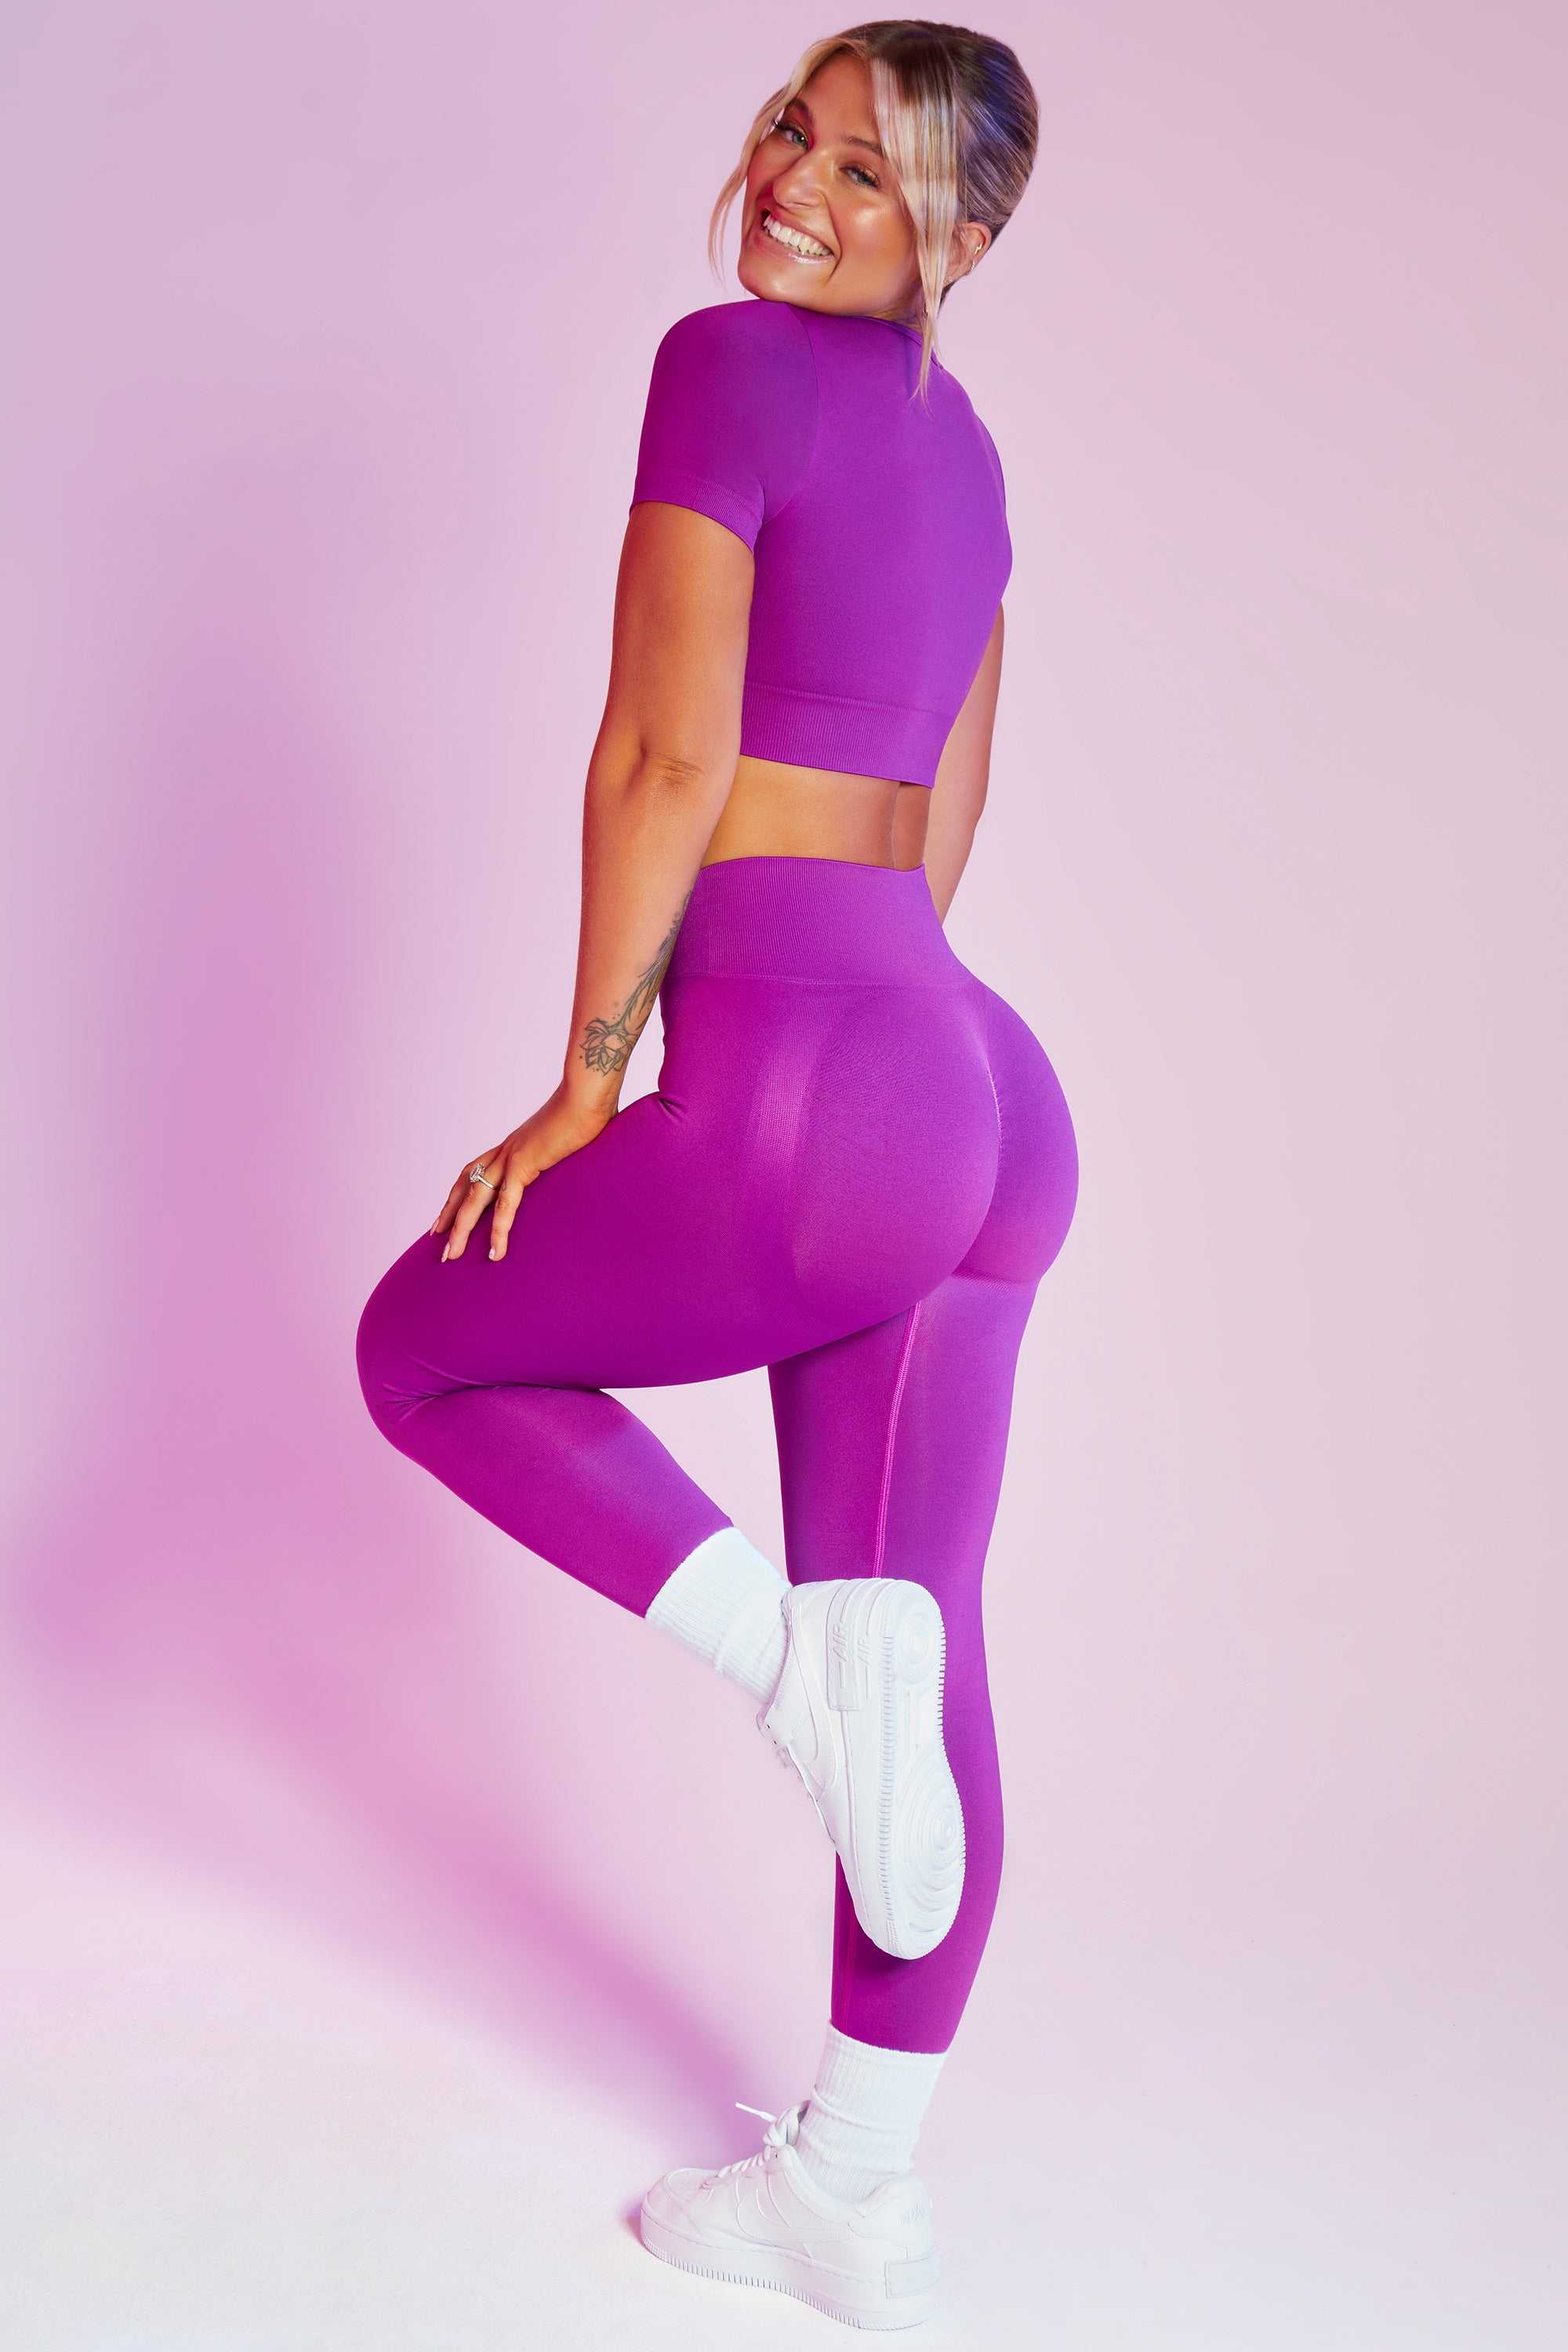 Superset - Petite Curved Waist Seamless Leggings in Purple